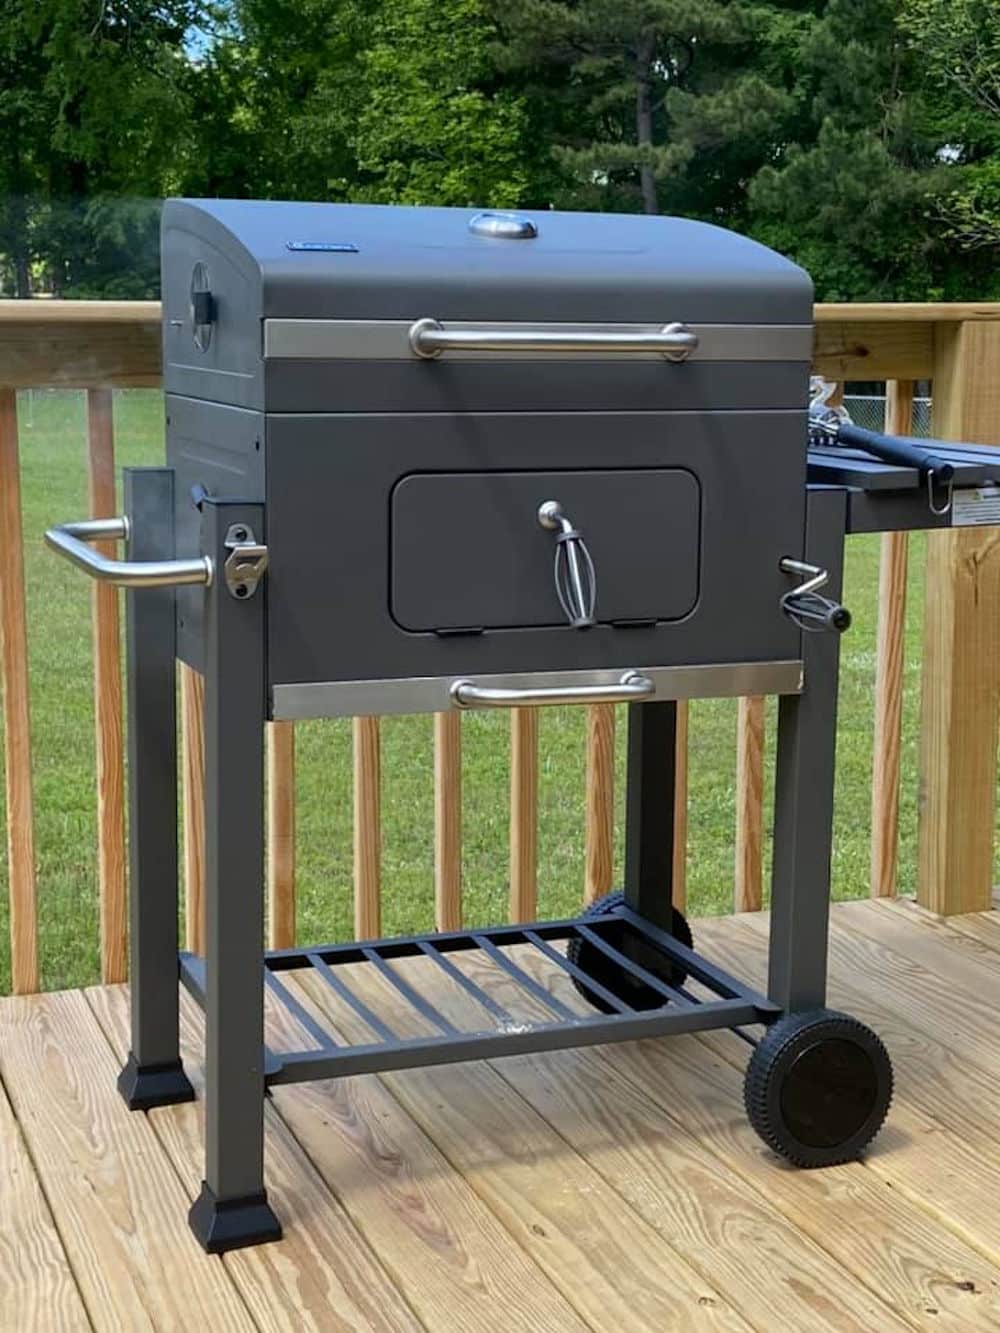 24bite: choosing a medium sized charcoal grill